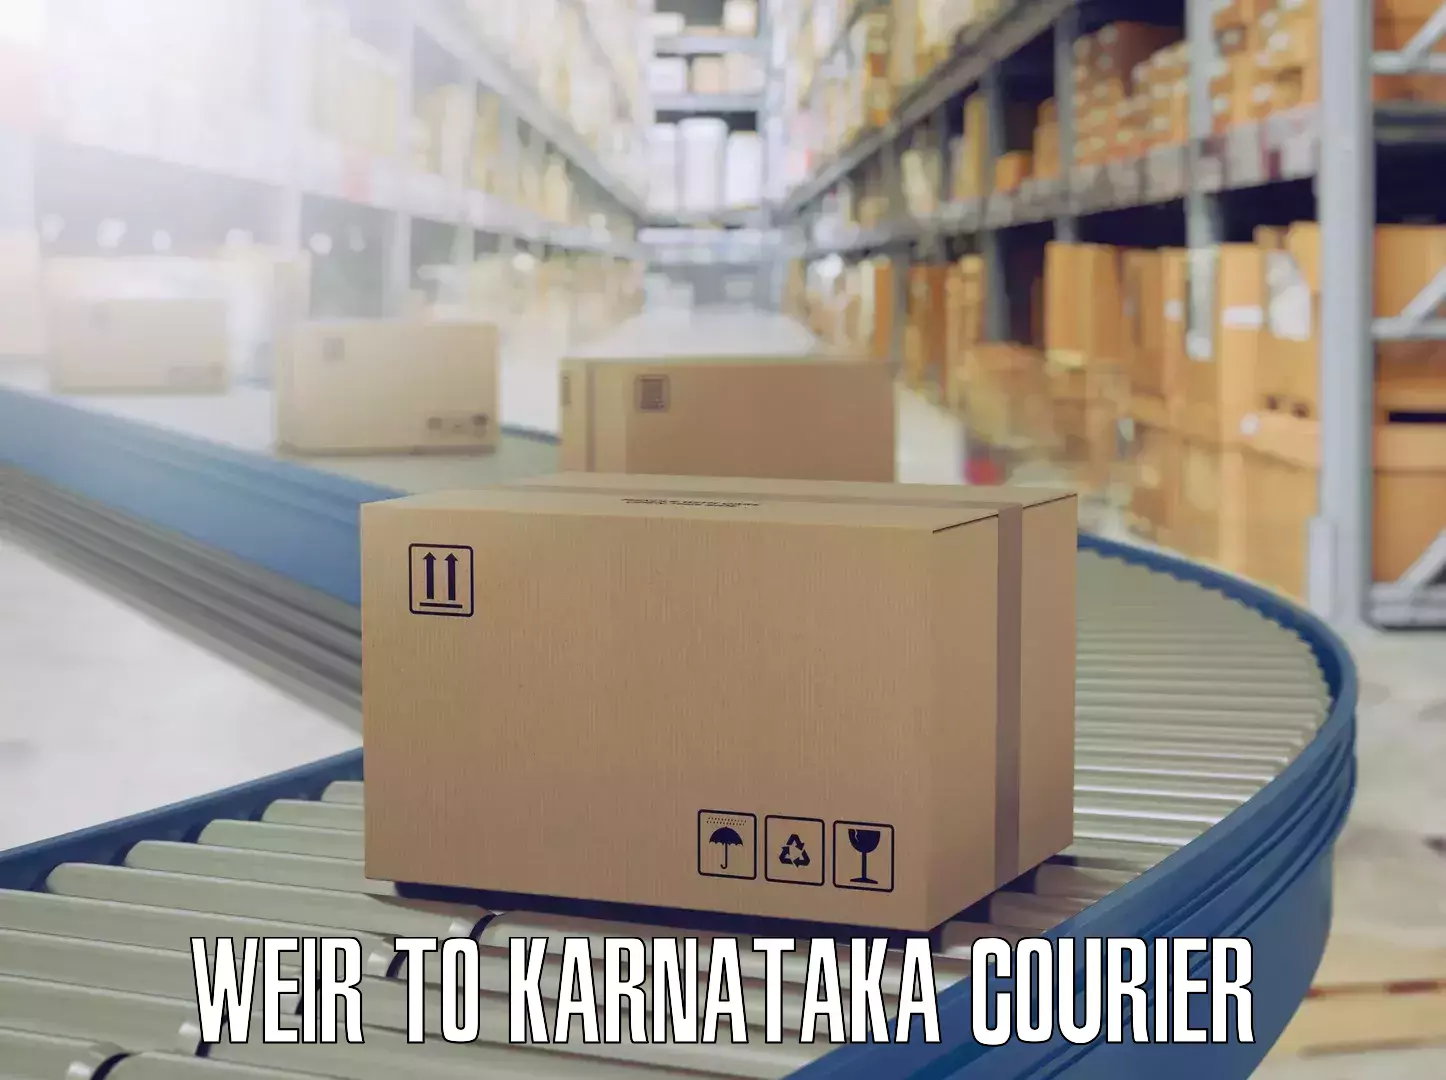 Home goods moving company Weir to Karnataka